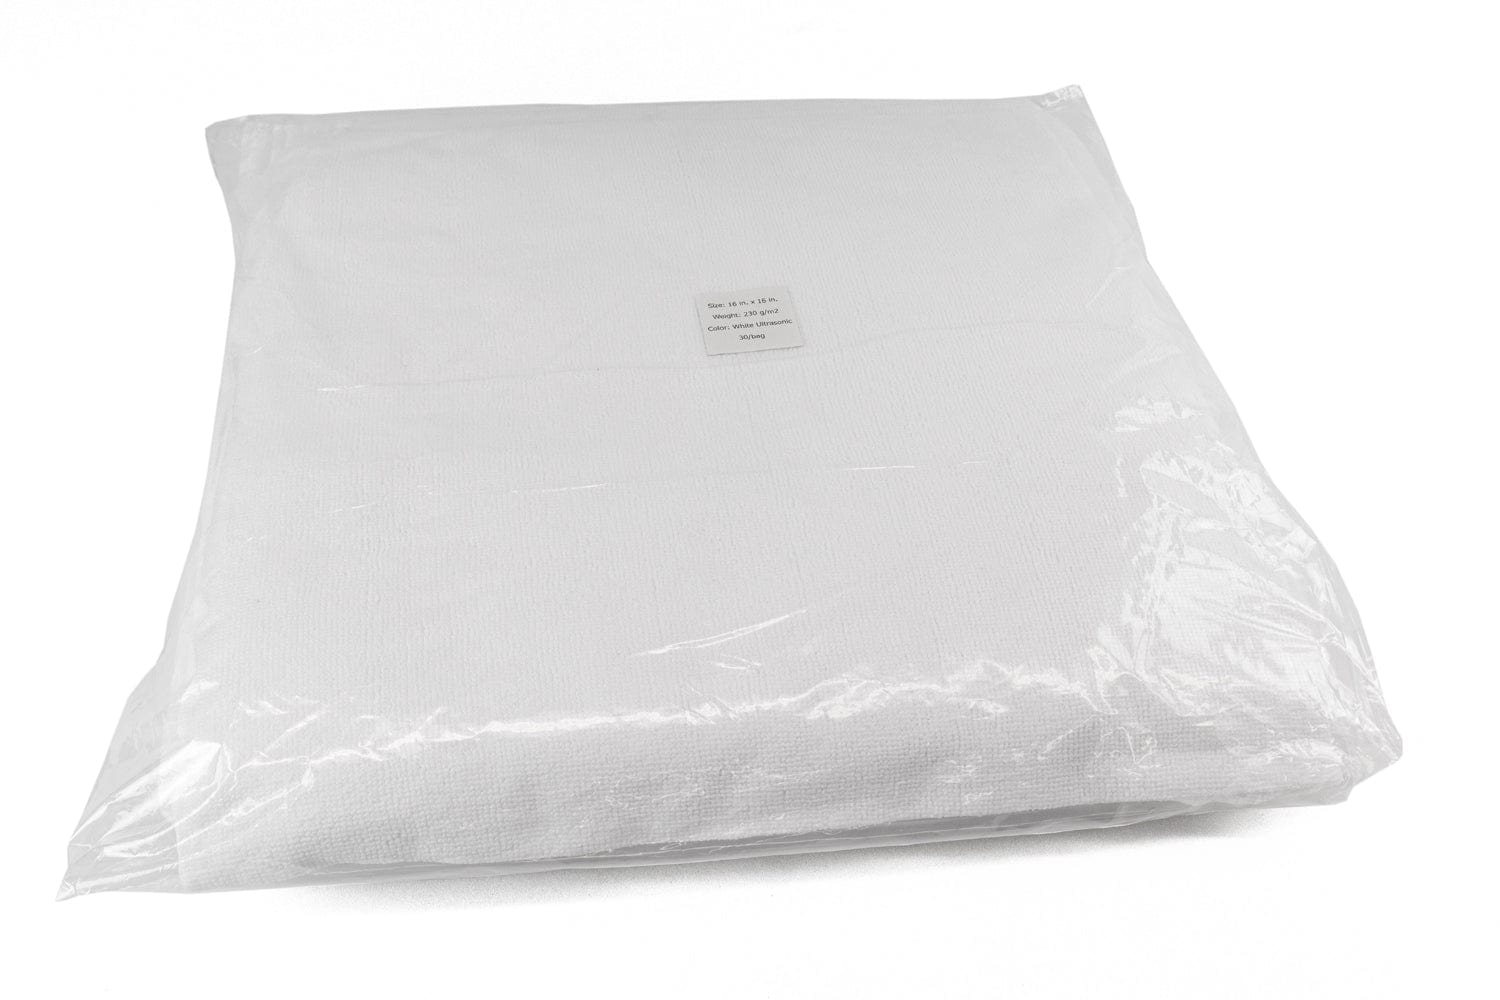 Autofiber Towel [Utility 230v] Lightweight Edgeless Microfiber Cleaning Towel 16"x16" - 30 Vacuum Pack